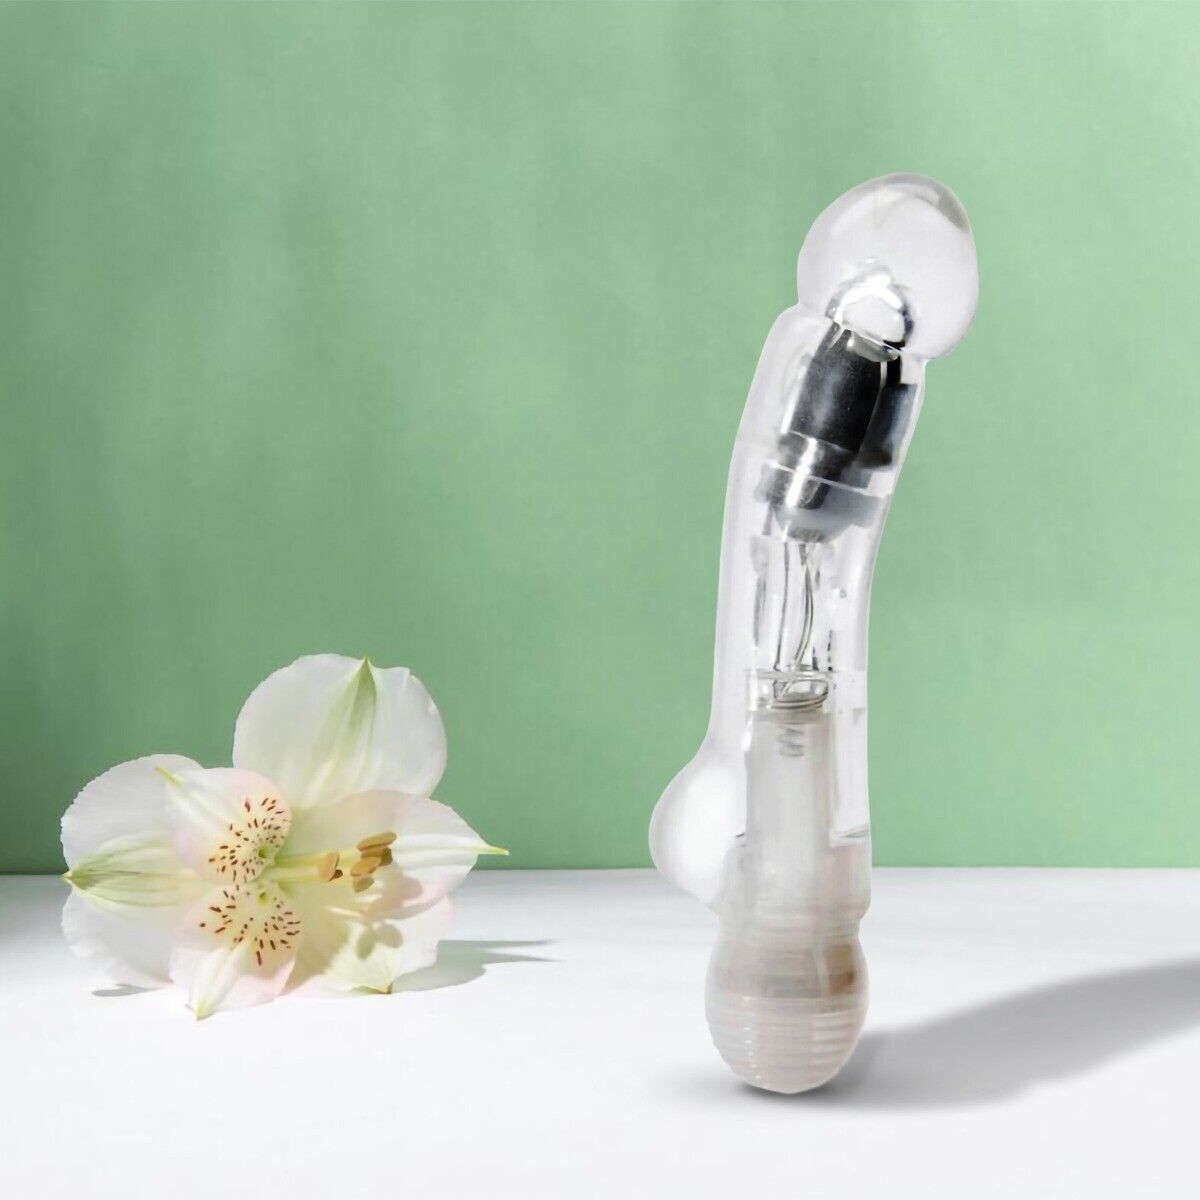 Vibrating Flexible Realistic Anal G-Spot Dildo Vibrator Sex-toy for Women Couple